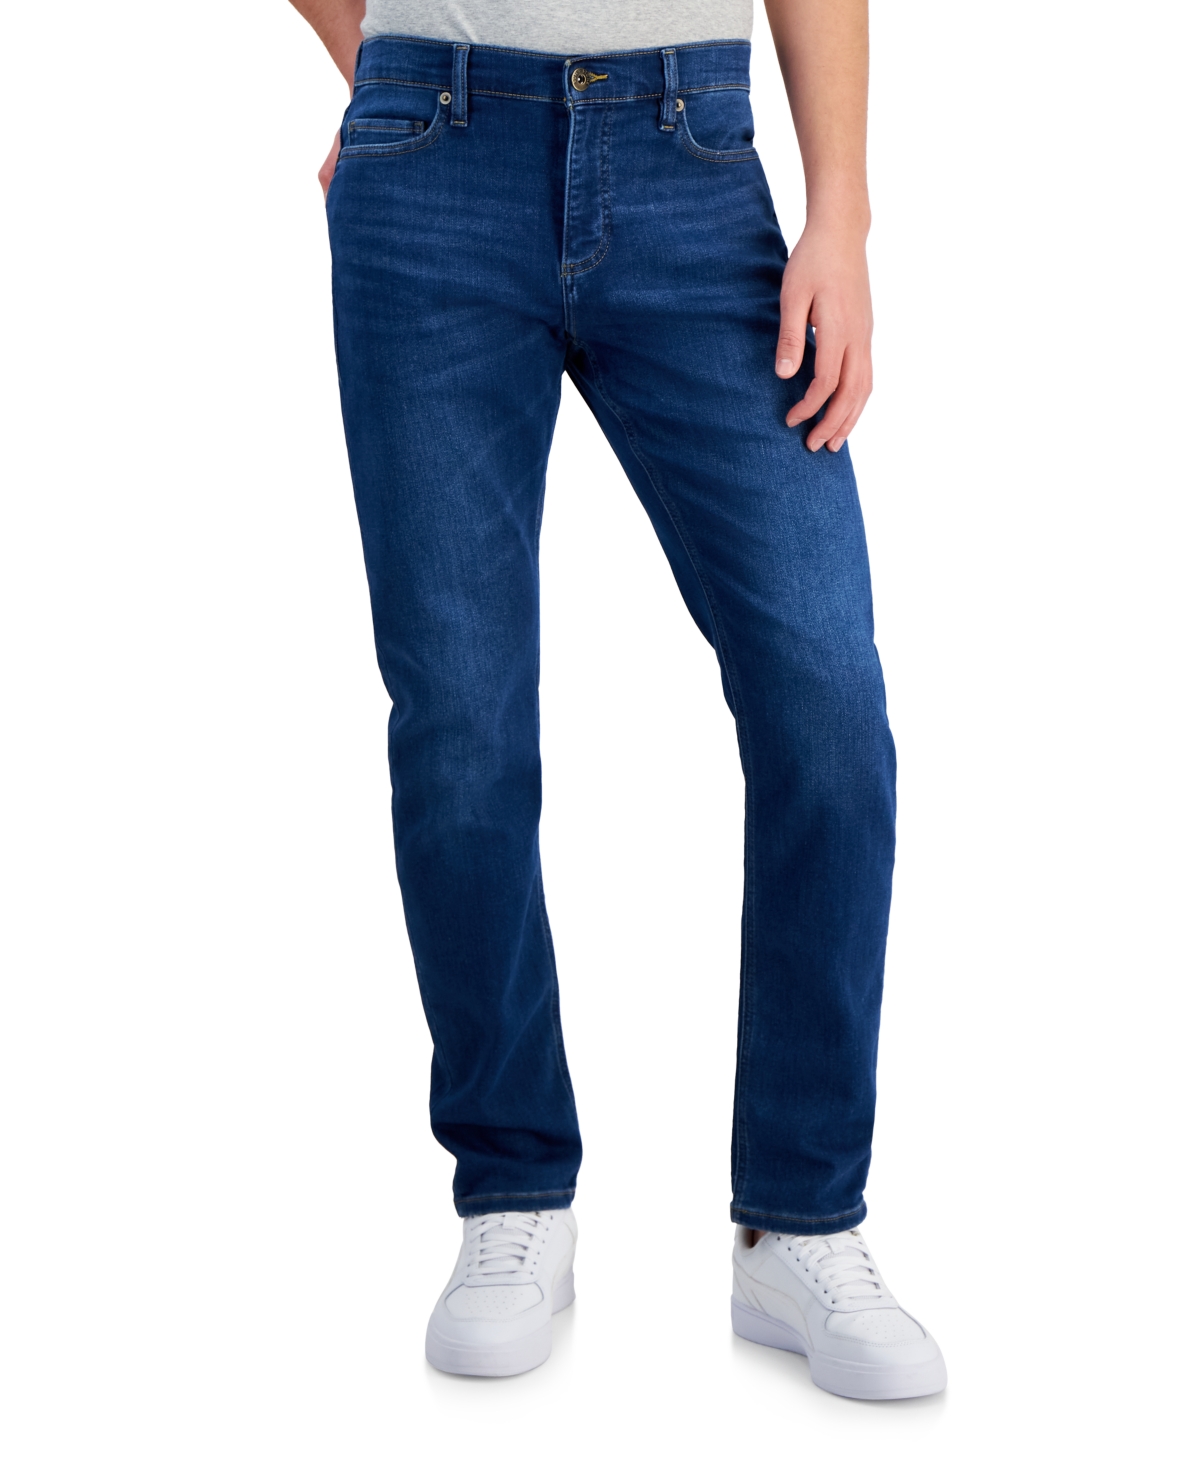 Men's Team Comfort Slim Fit Jeans, Created for Macy's - Team